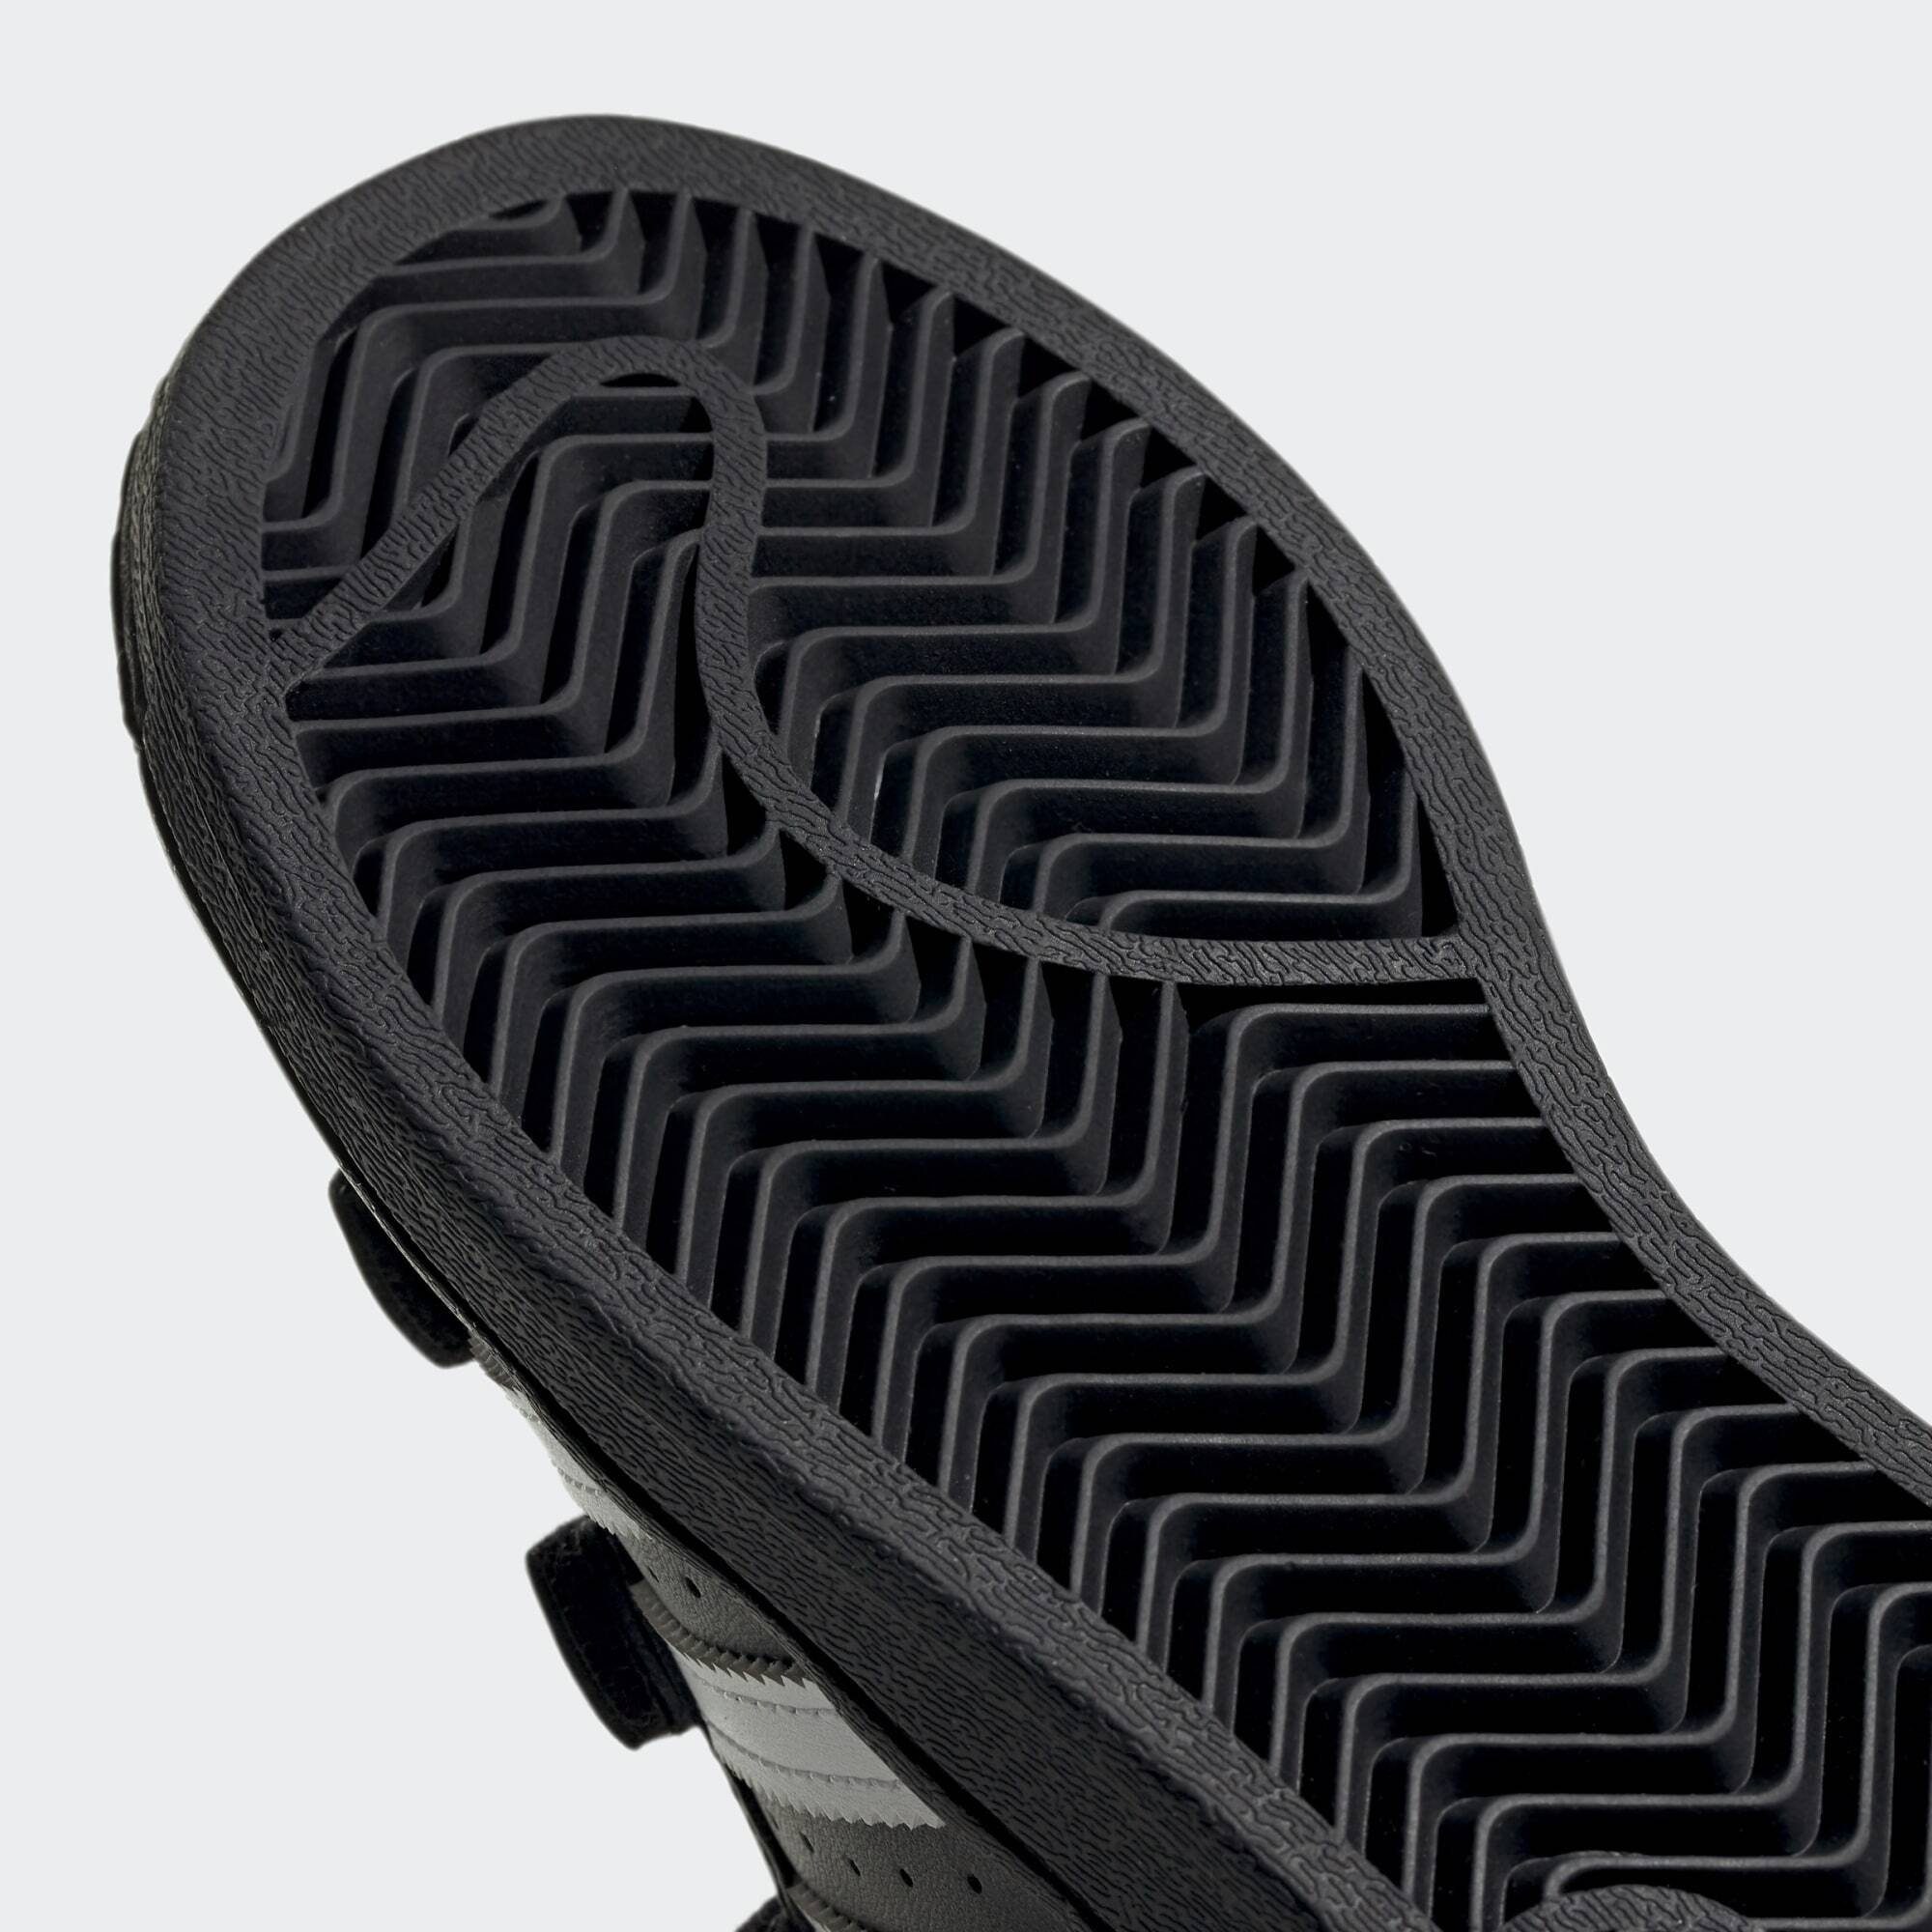 SCHUH / Cloud SUPERSTAR Black Black Core Sneaker White adidas / Core Originals